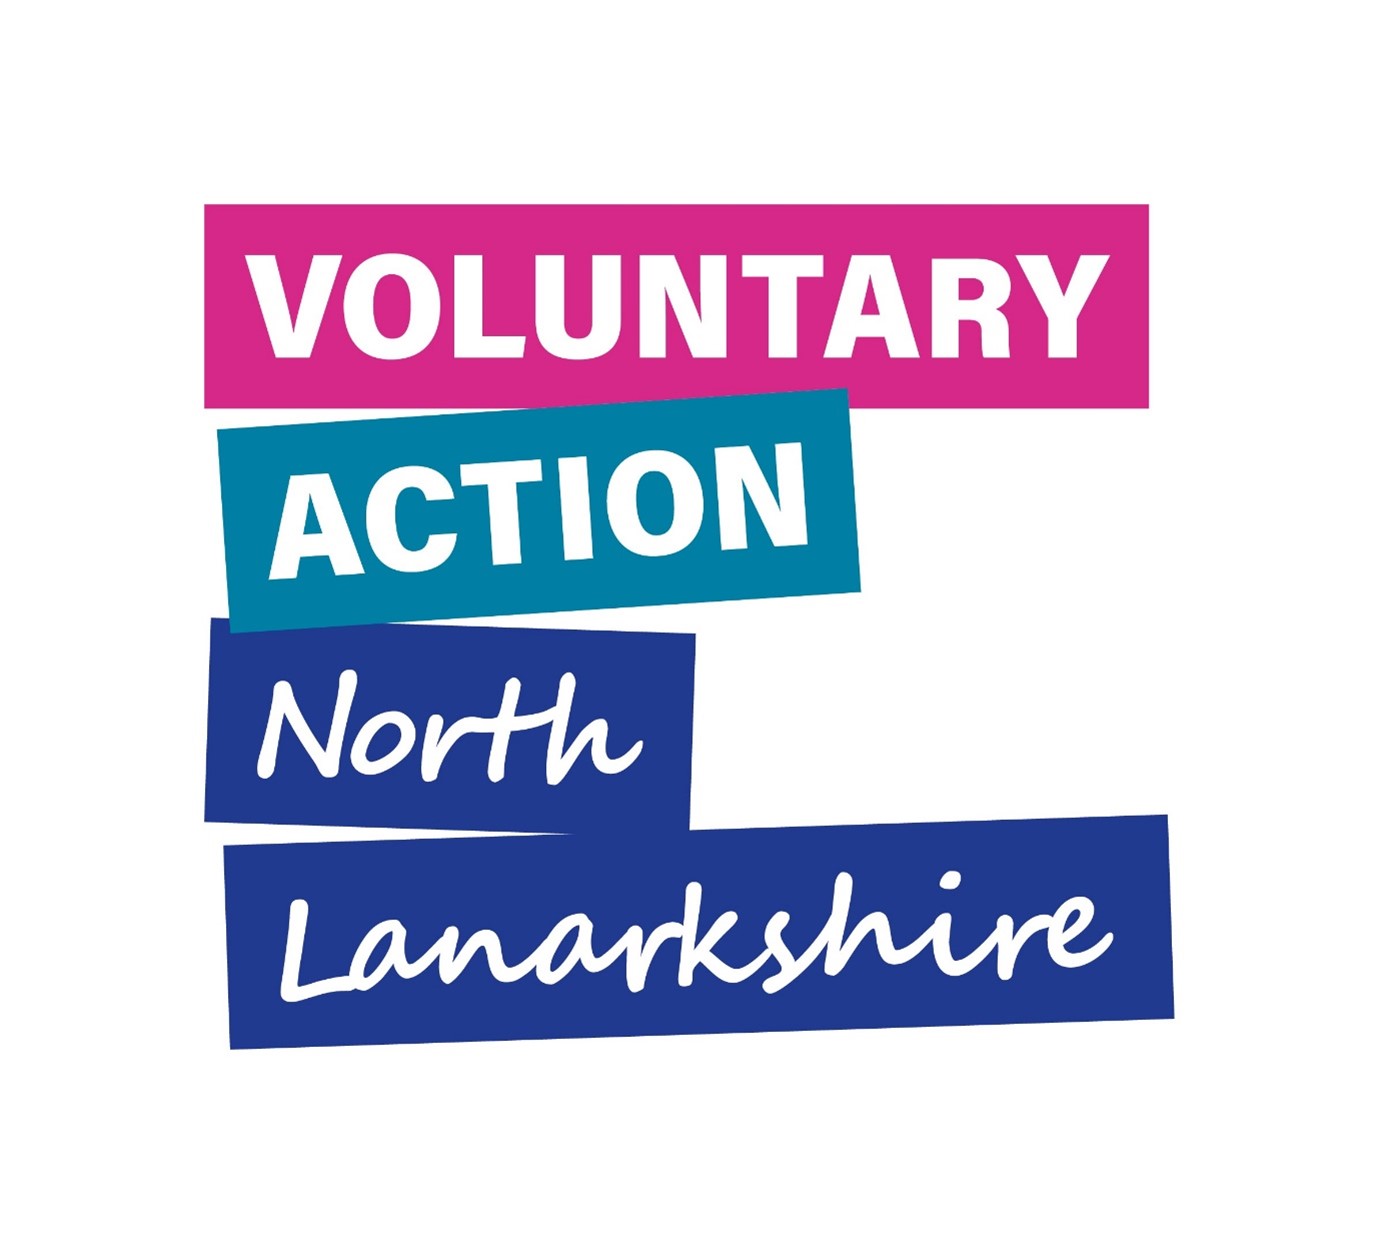 Voluntary Action North Lanarkshire